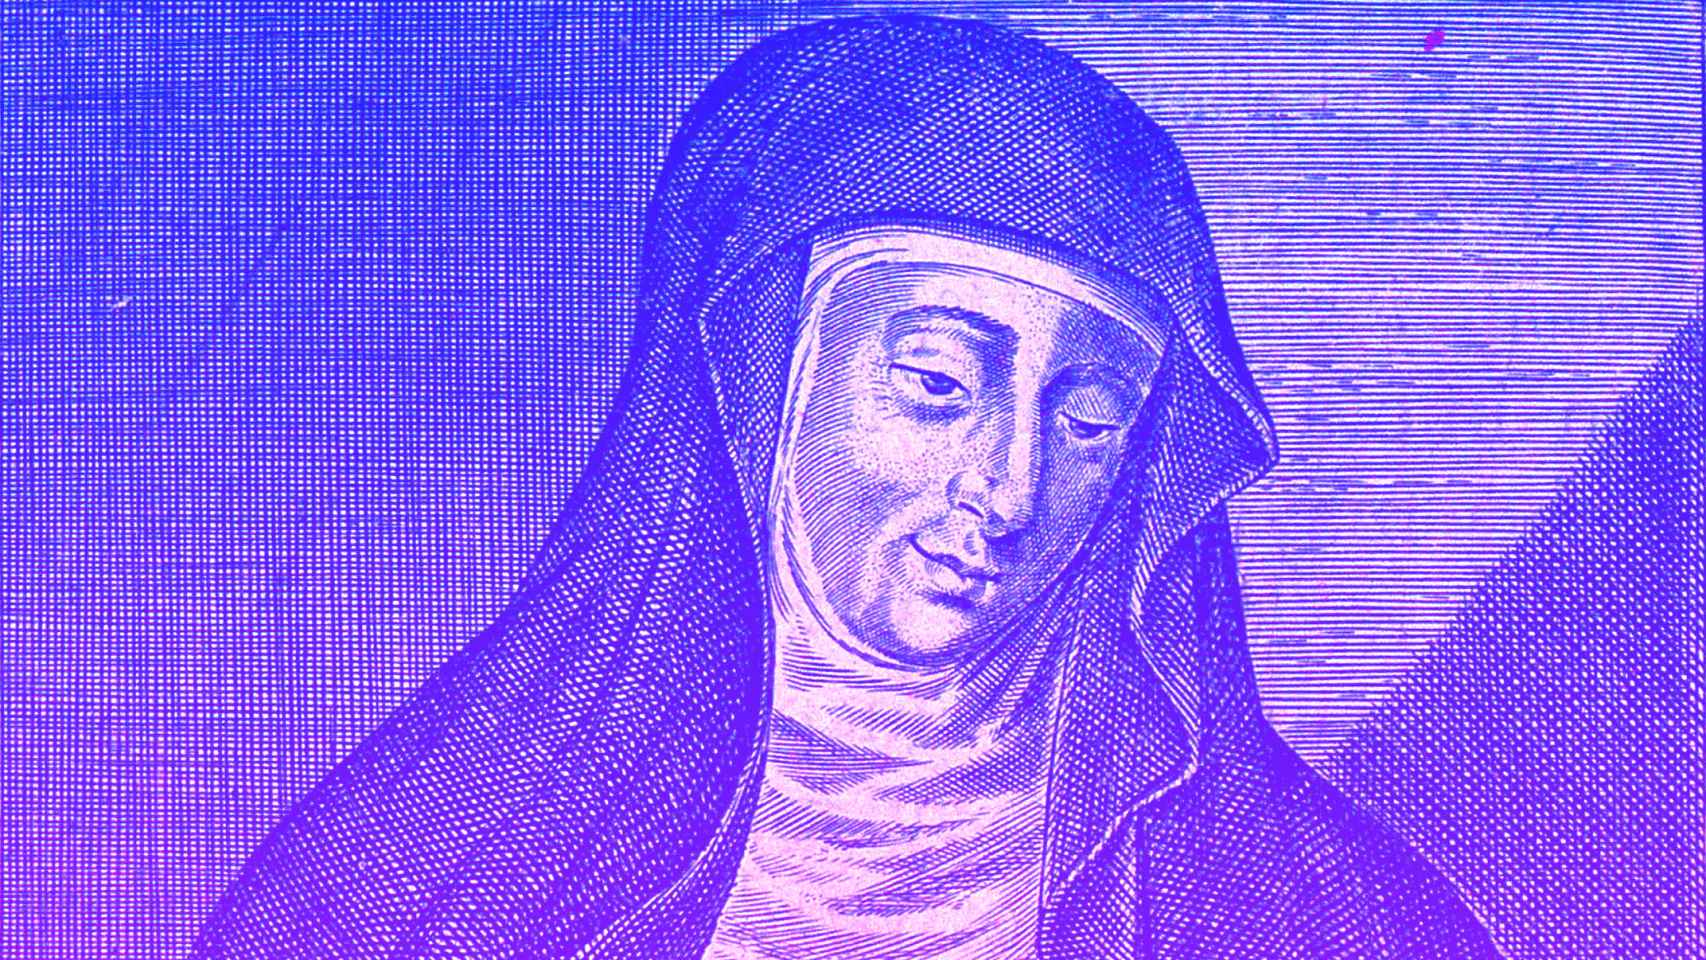 Hildegard von Bingen, grabado de la época